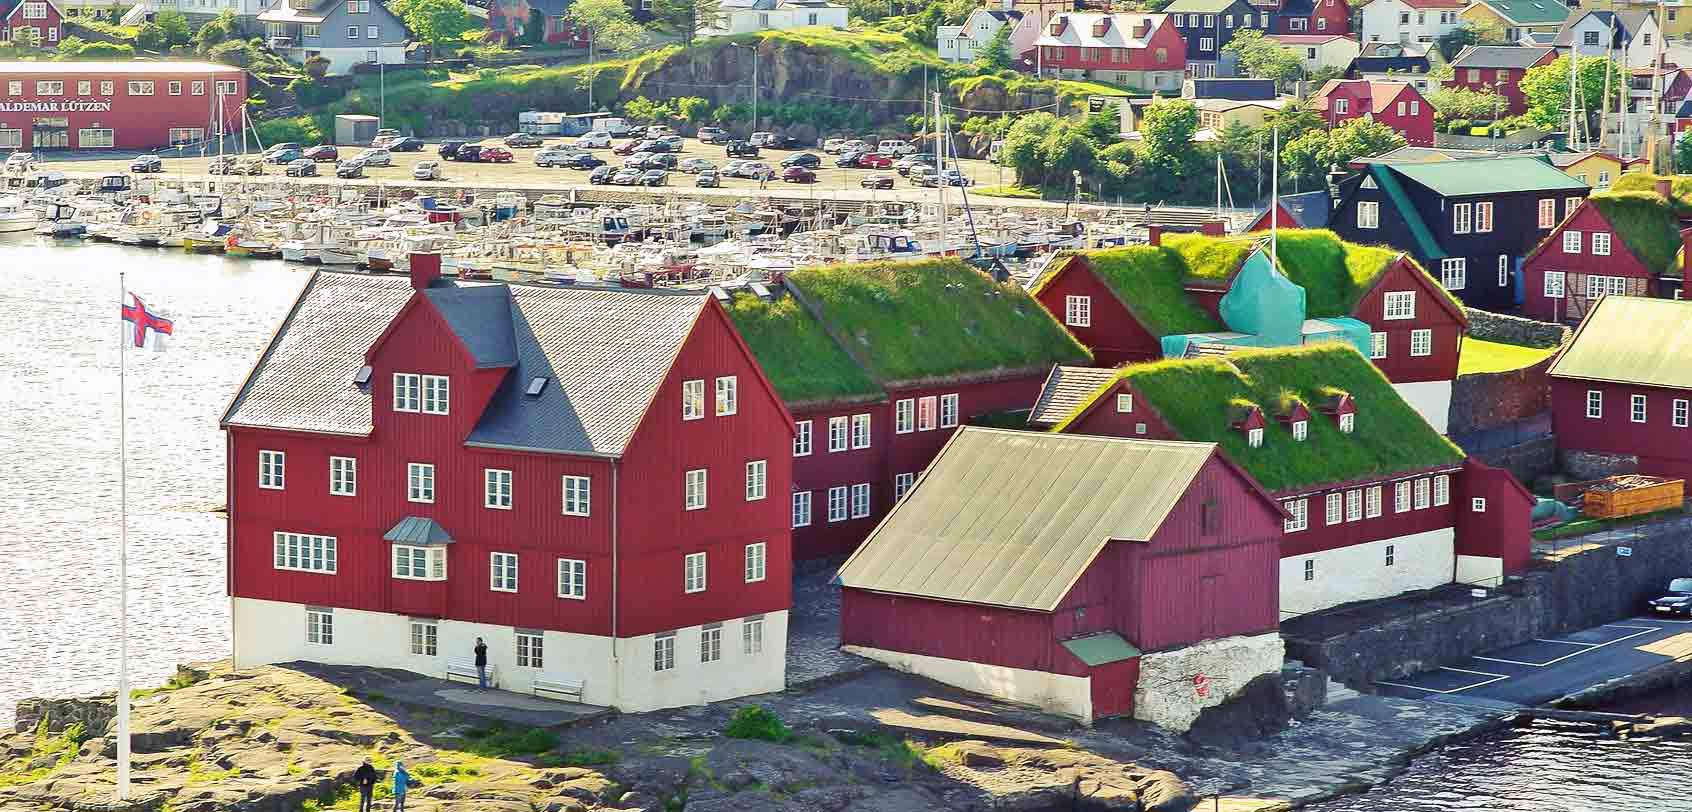 Faroe Islands Itinerary: Tinganes